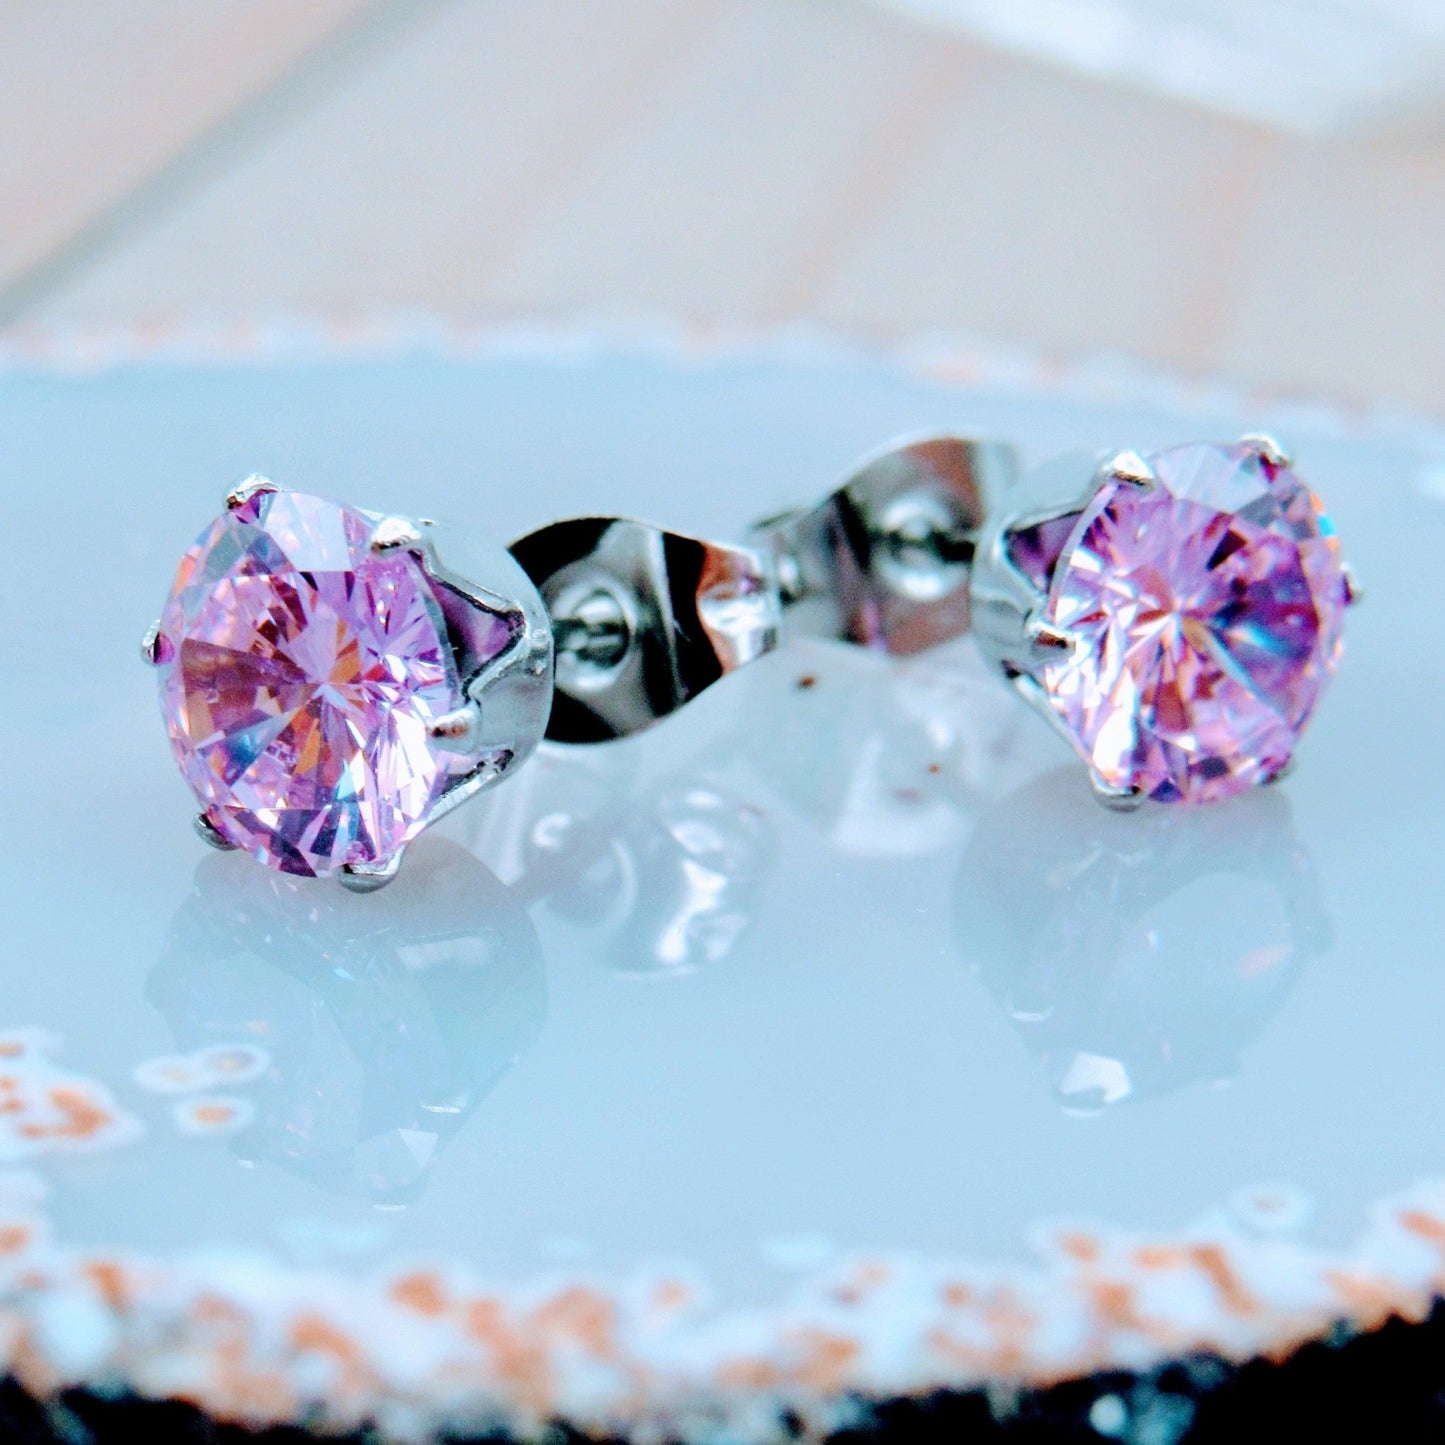 Pink cubic zirconia gemstones 316L stainless steel butterfly back ear piercing stud set 3mm-7mm diameter pick your size - Siren Body Jewelry